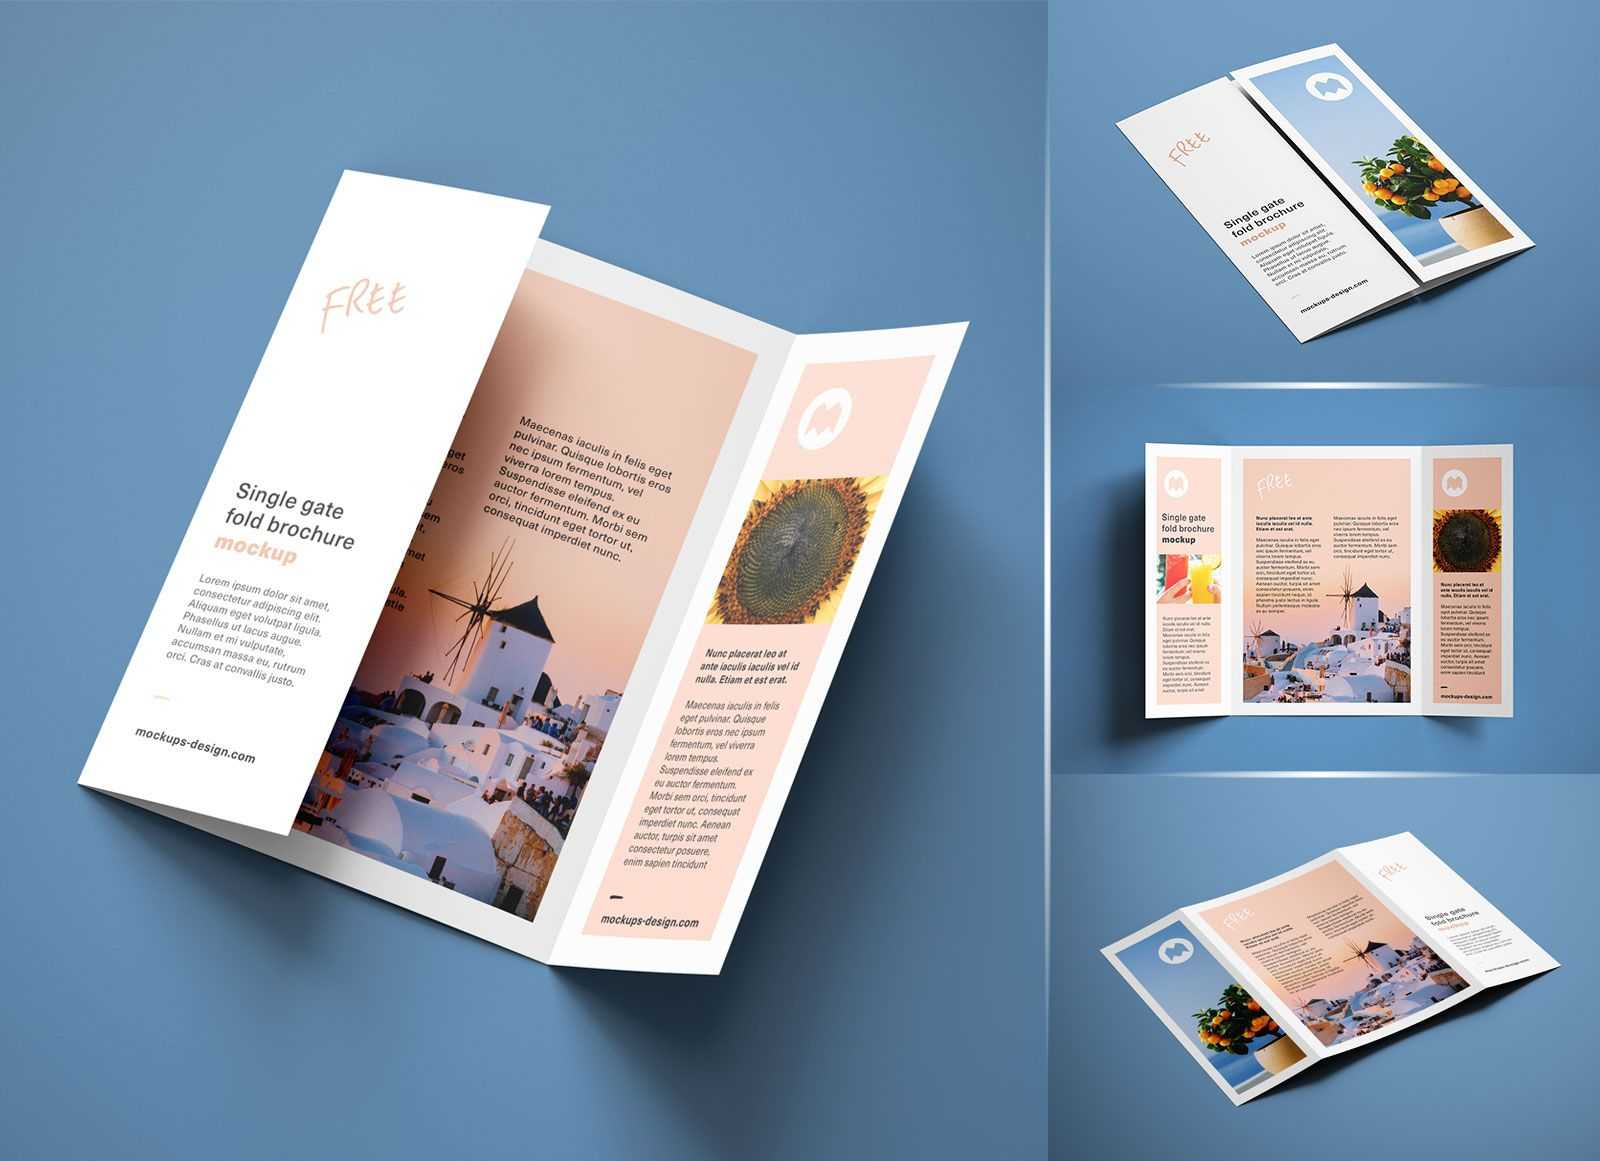 Free A4 Single Gate Fold Brochure Mockup Psd Set | Free Within Single Page Brochure Templates Psd